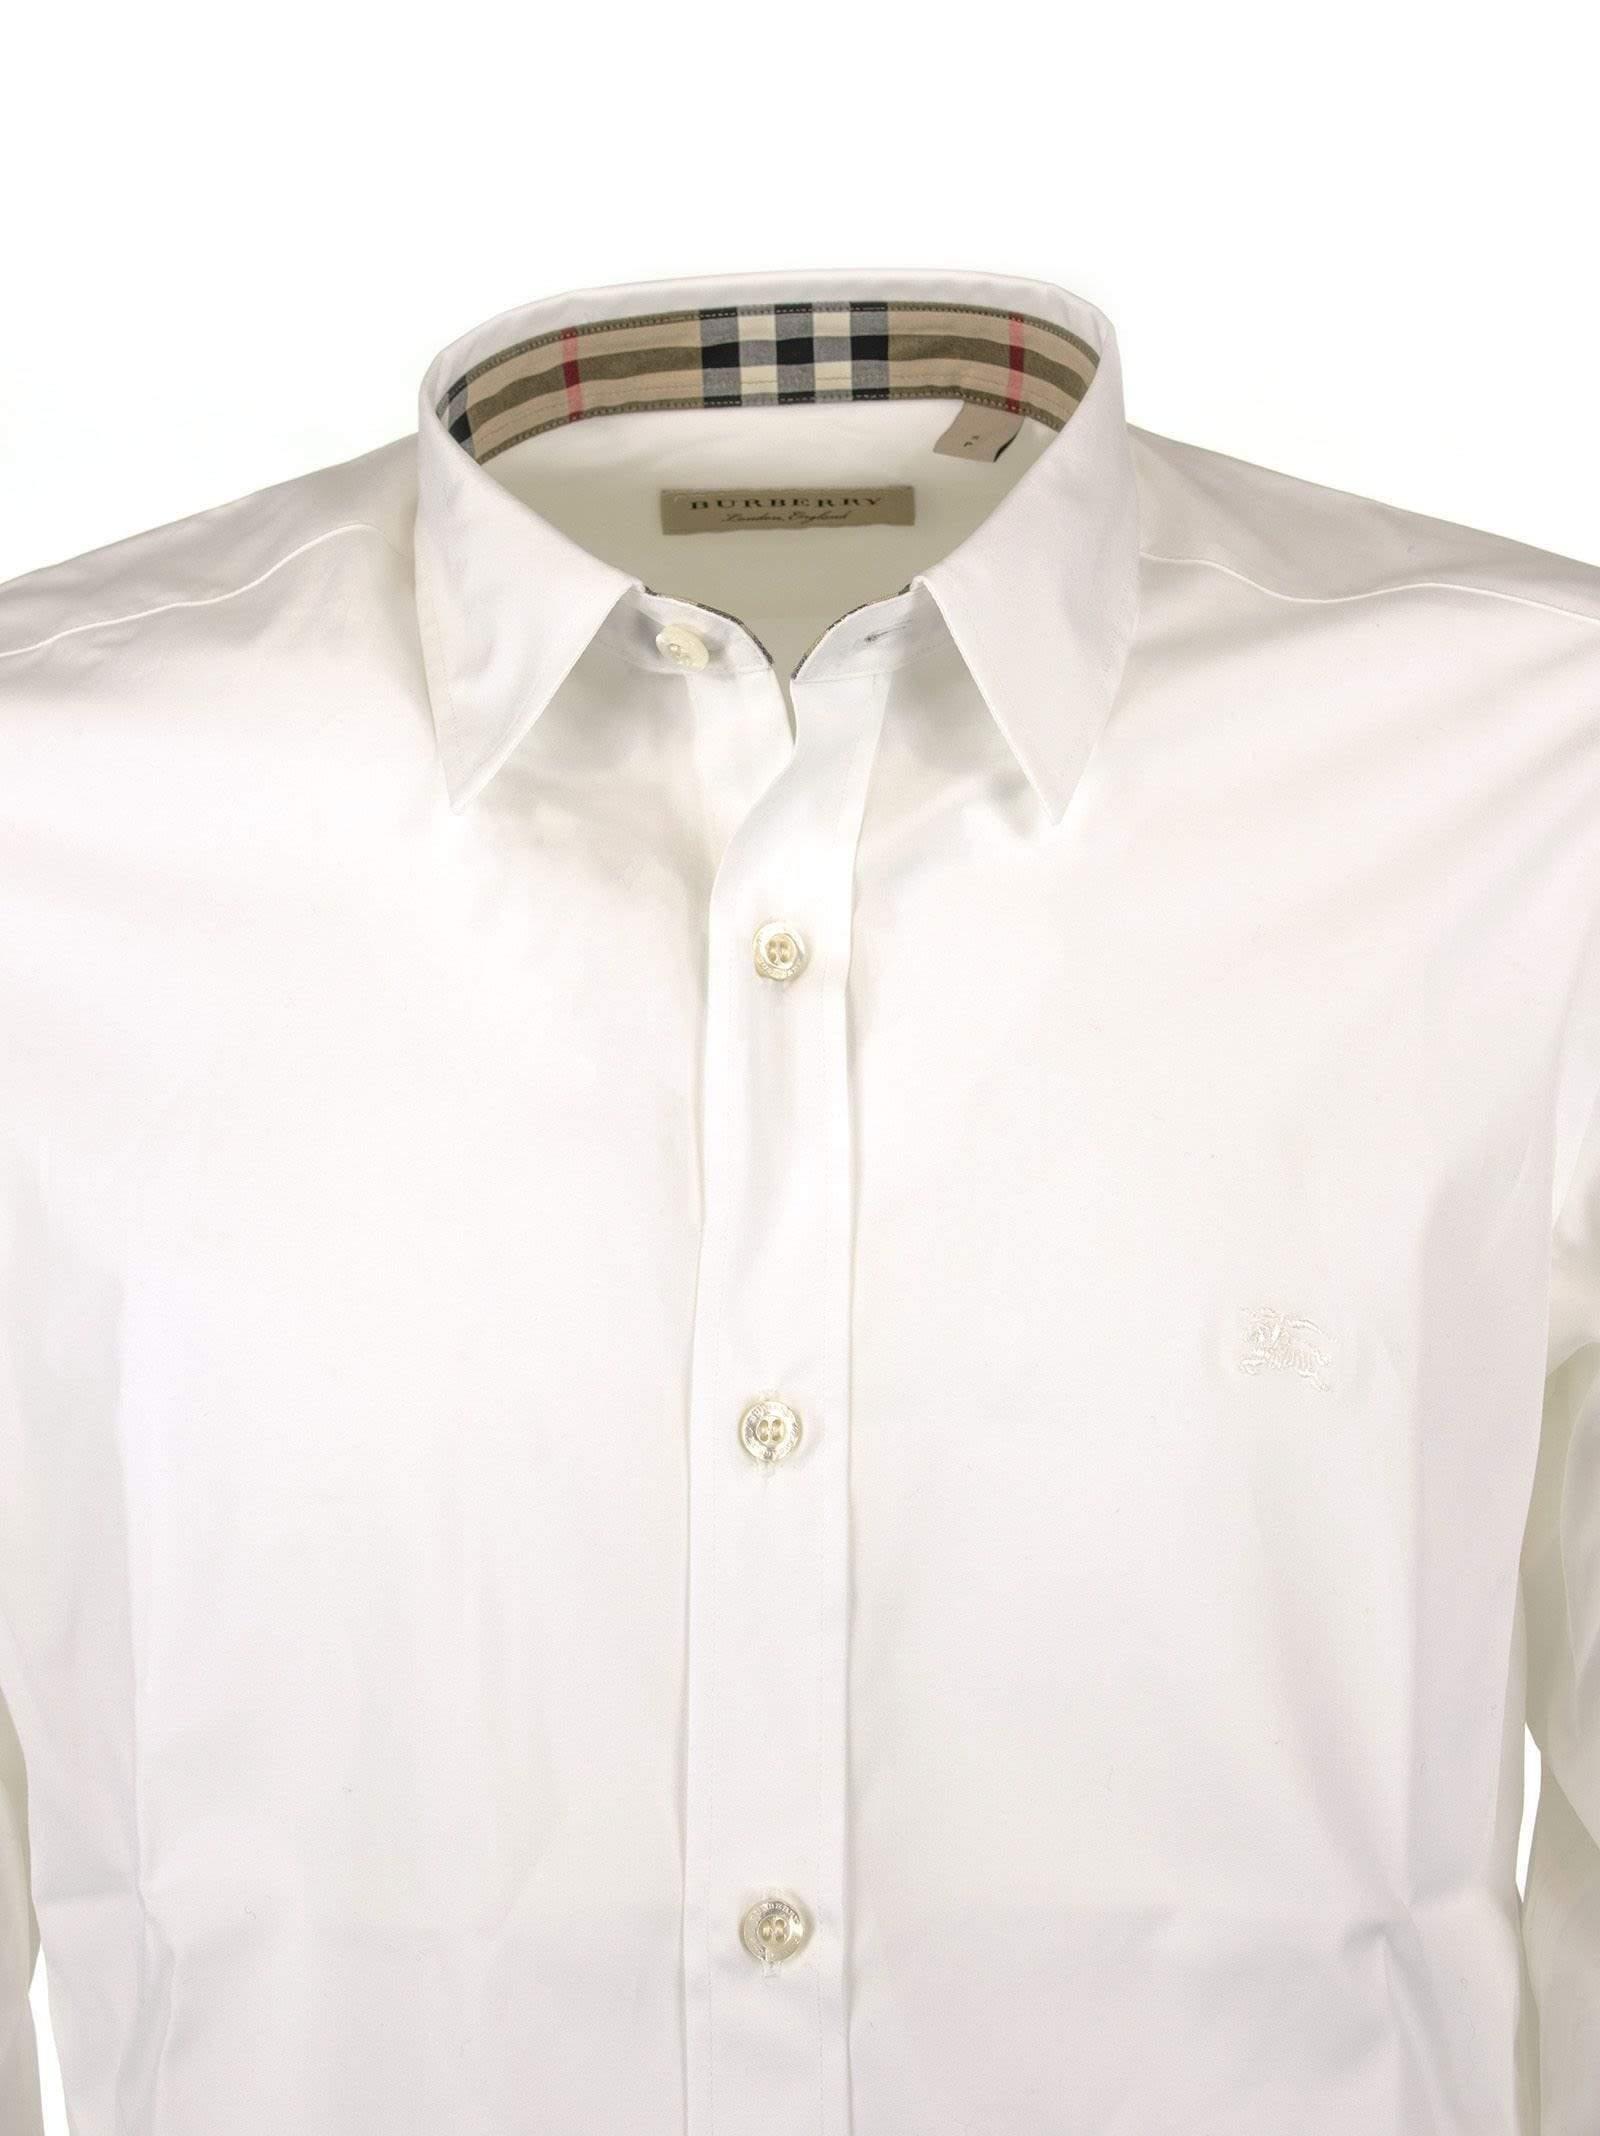 Burberry William White stretch Cotton Poplin Shirt in White for Men - Lyst